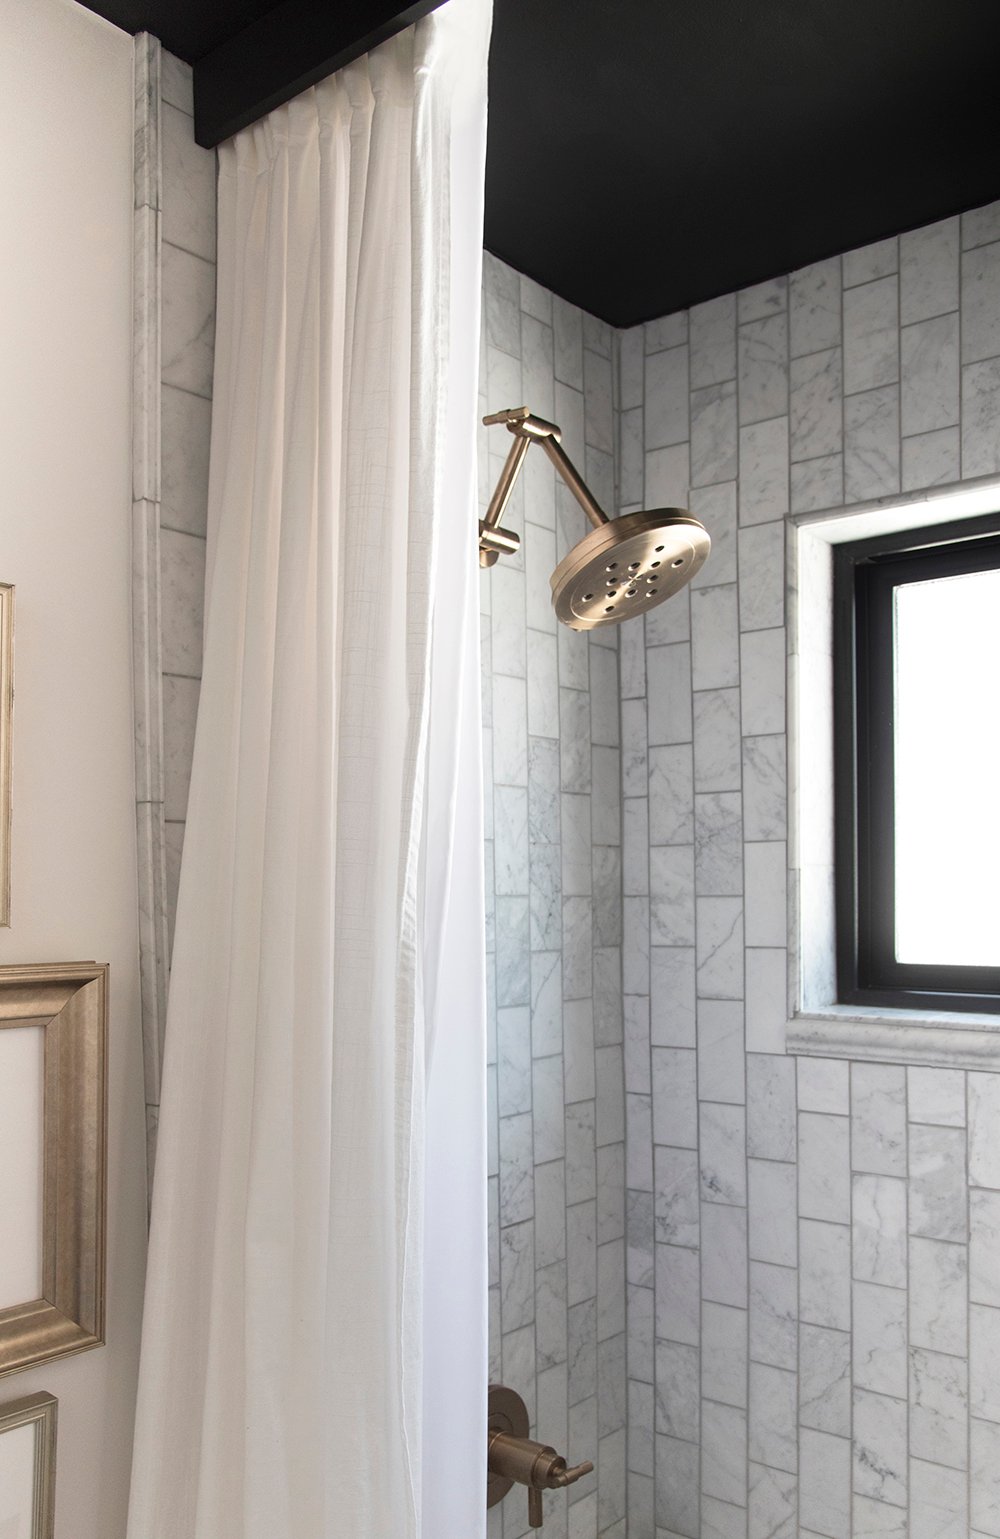 5 Classic Shower Design Plans - roomfortuesday.com